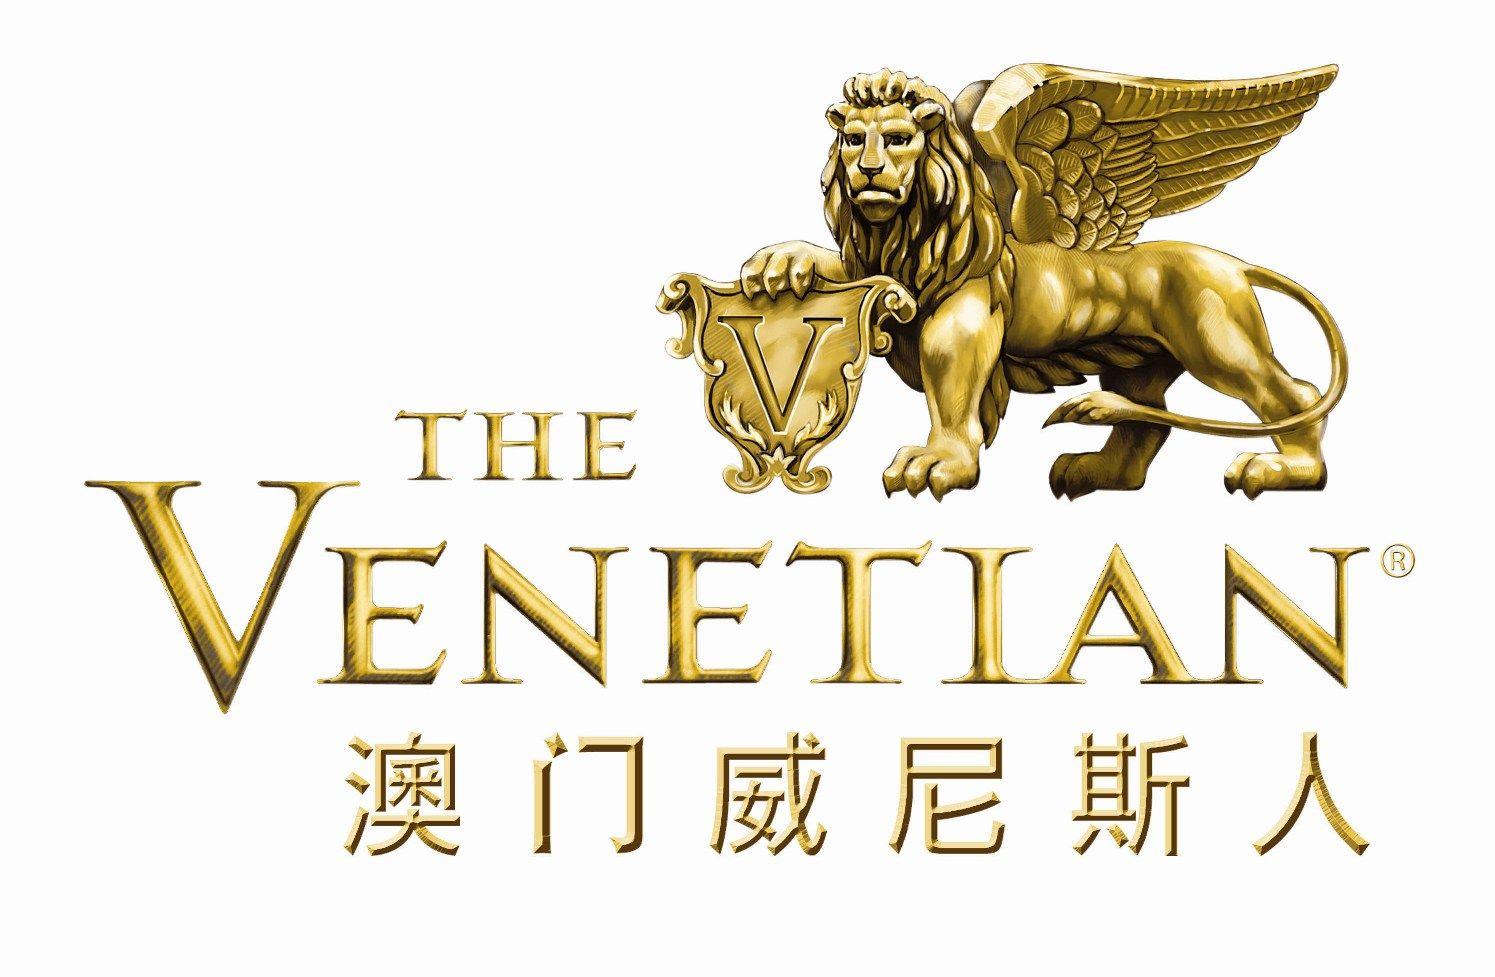 Venetian Logo - The venetian Logos